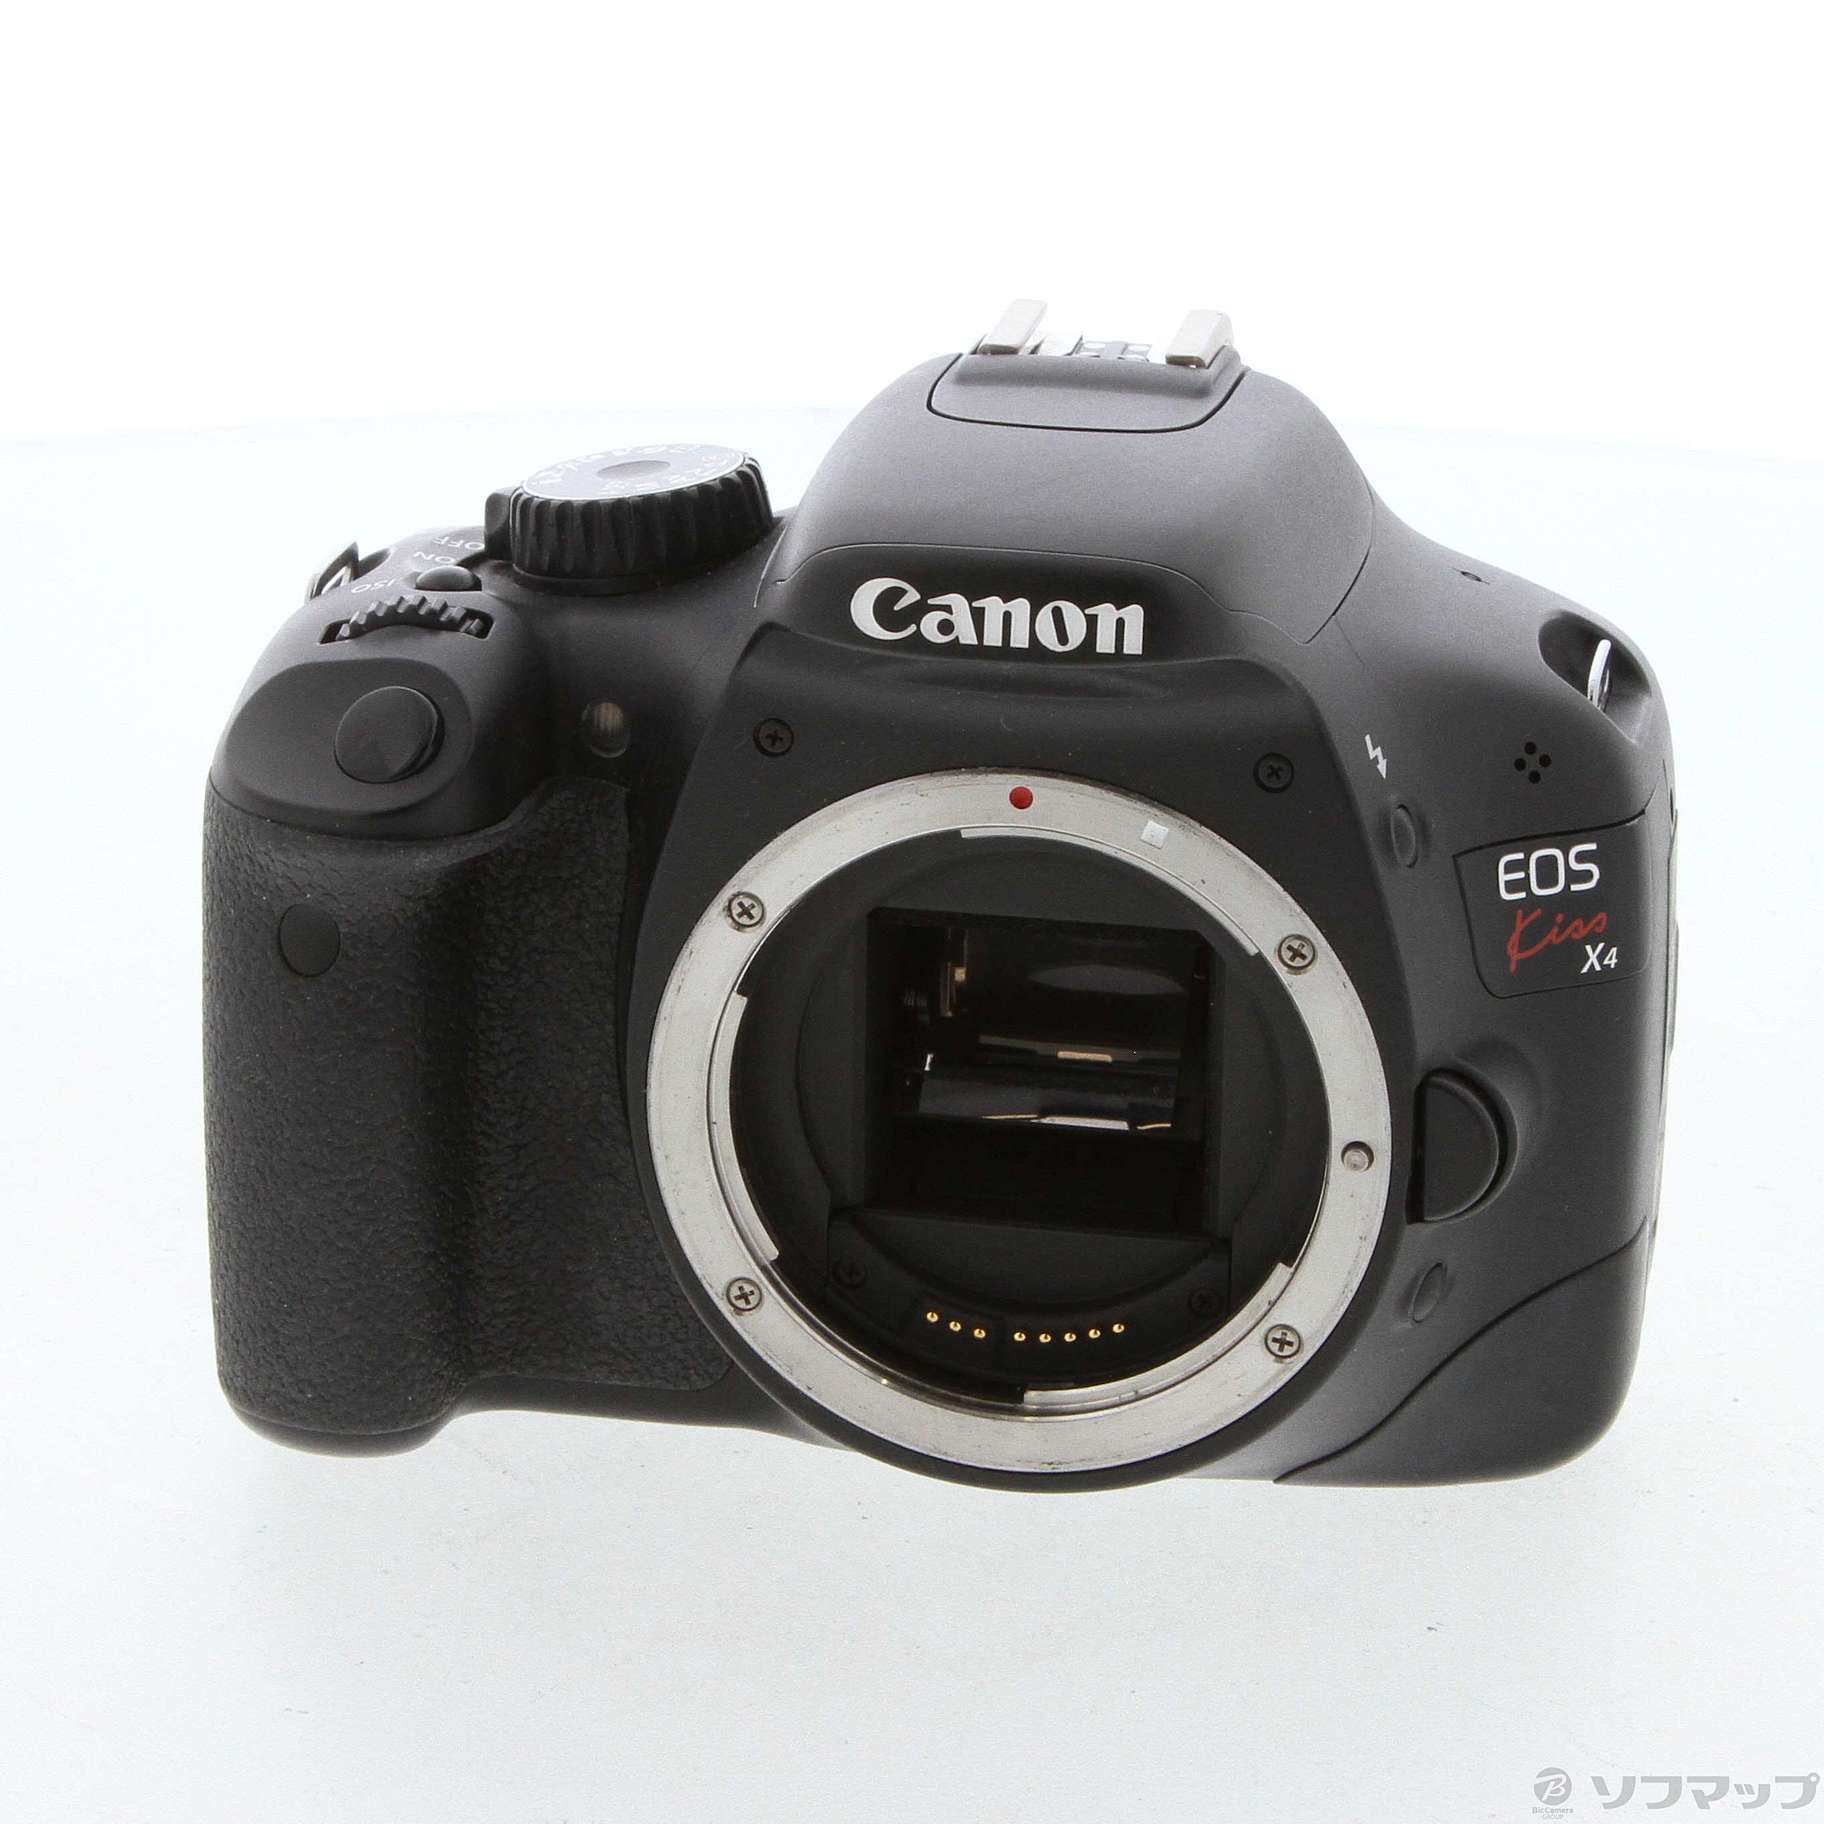 Canon EOS kiss x4 レンズ付きです。